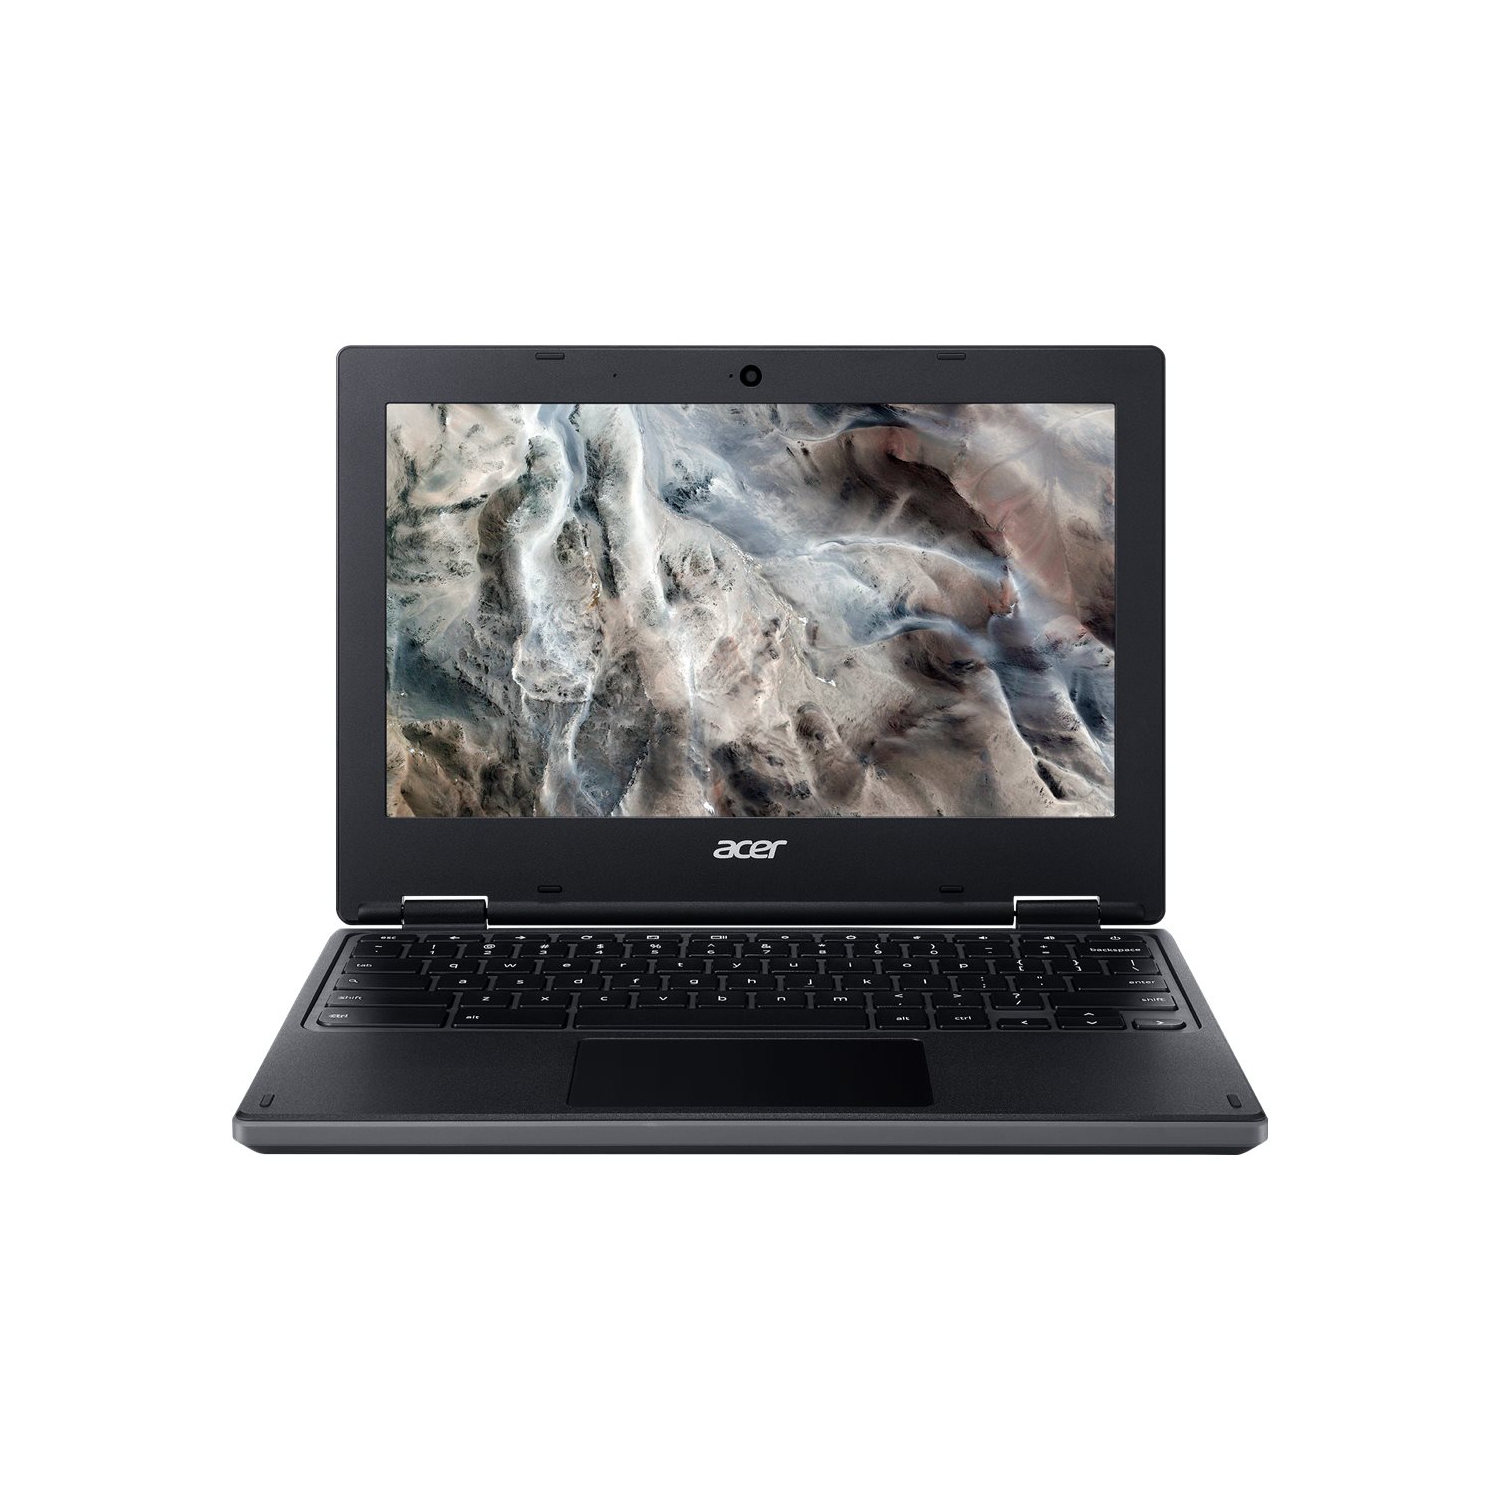 Refurbished (Excellent) - Acer 11.6" Chromebook (AMD A4-9120C/4Gb Ram/32Gb eMMC/Google Chrome) - Manufacturer ReCertified w/ 1 Year Warranty